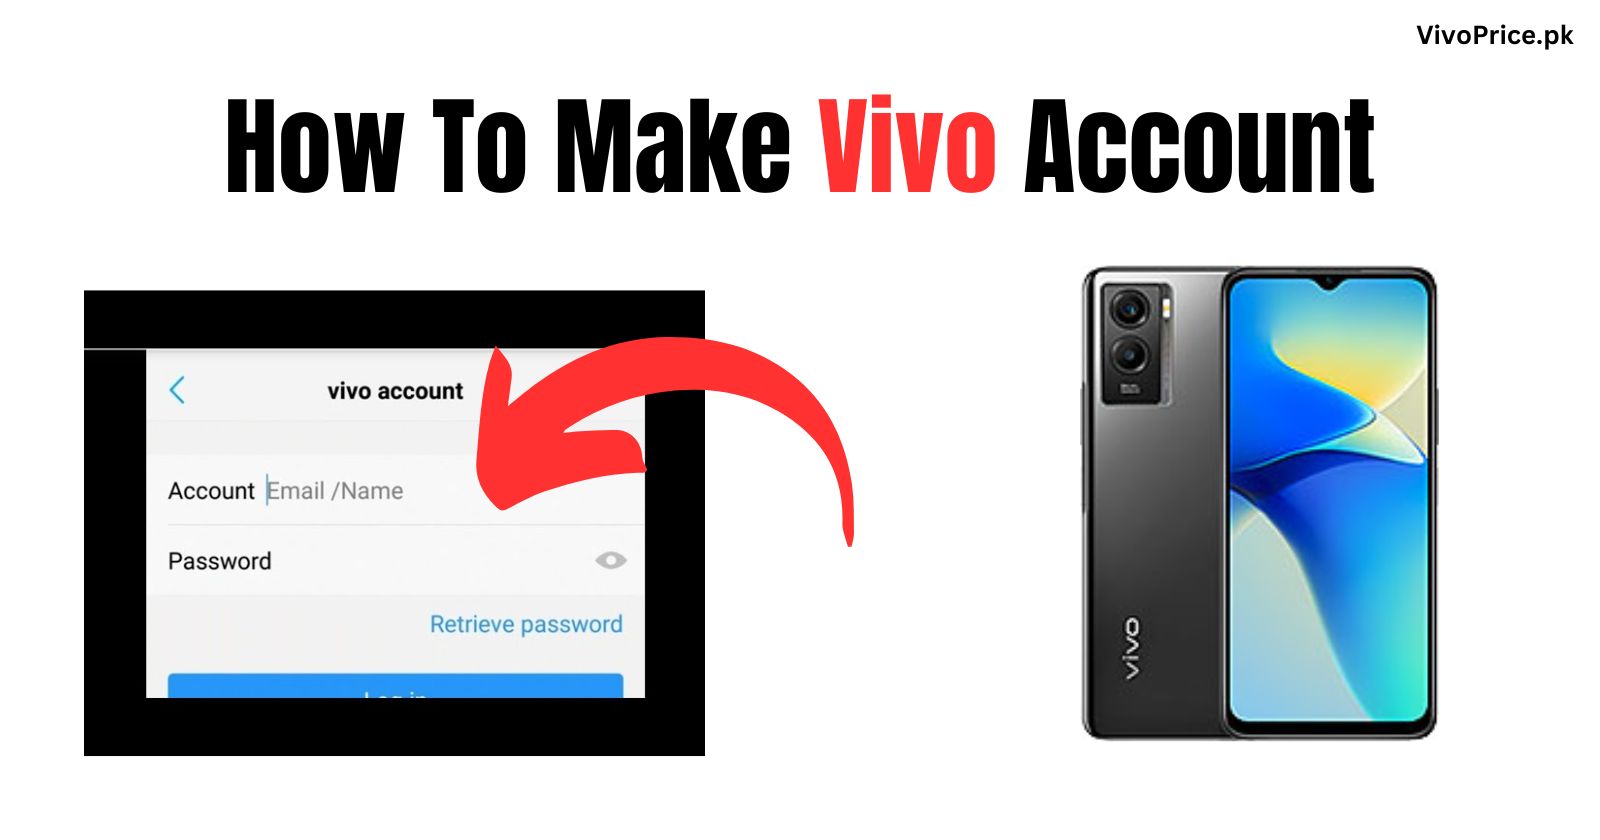 How To Make Vivo Account | VivoPrice.pk